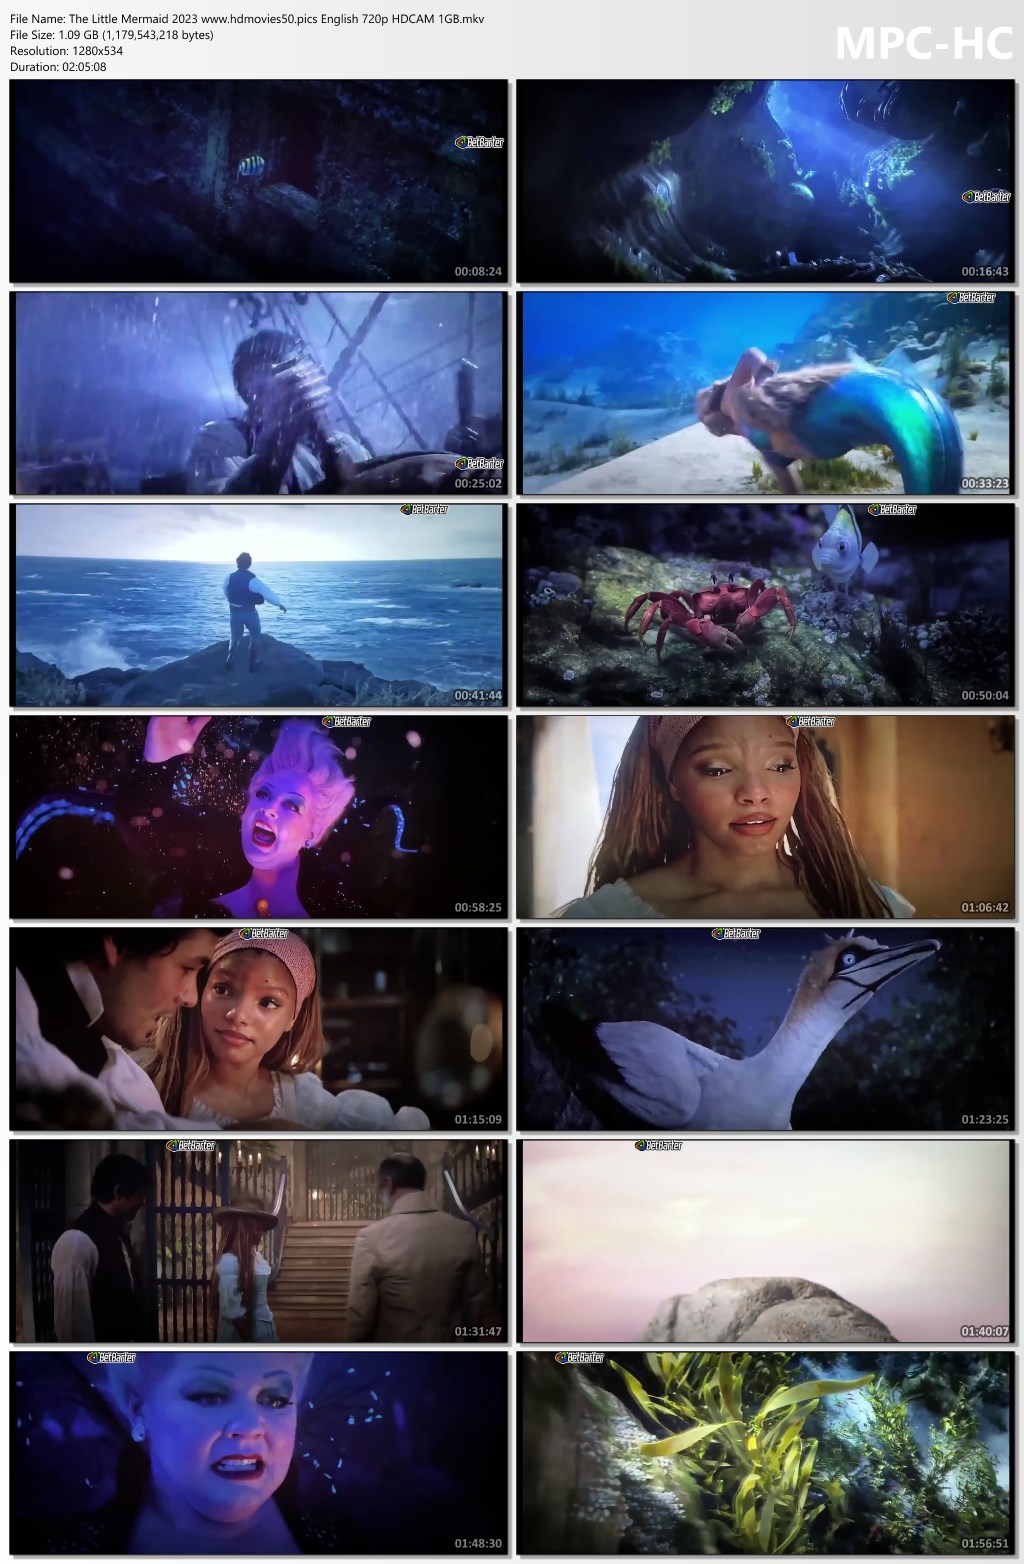 The Little Mermaid 2023 English 720p HDCAM 1.1GB